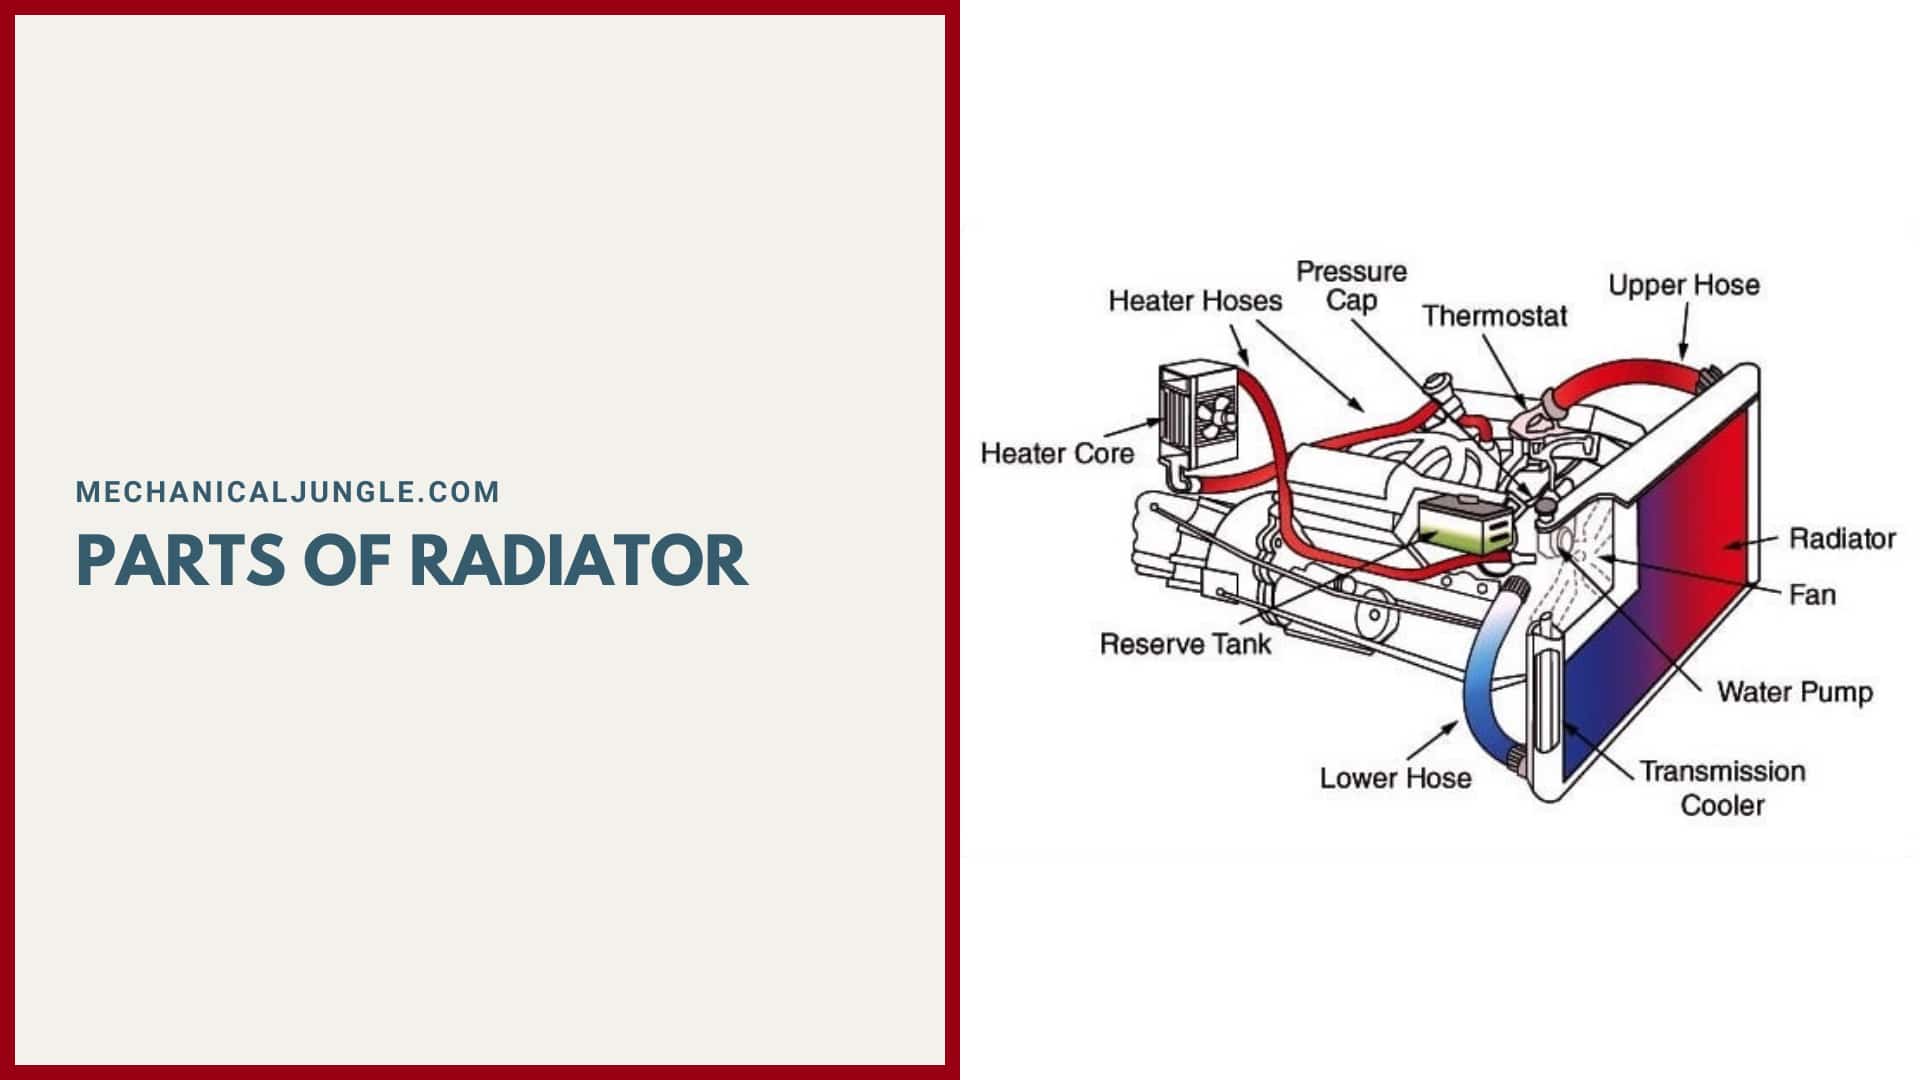 Parts of Radiator